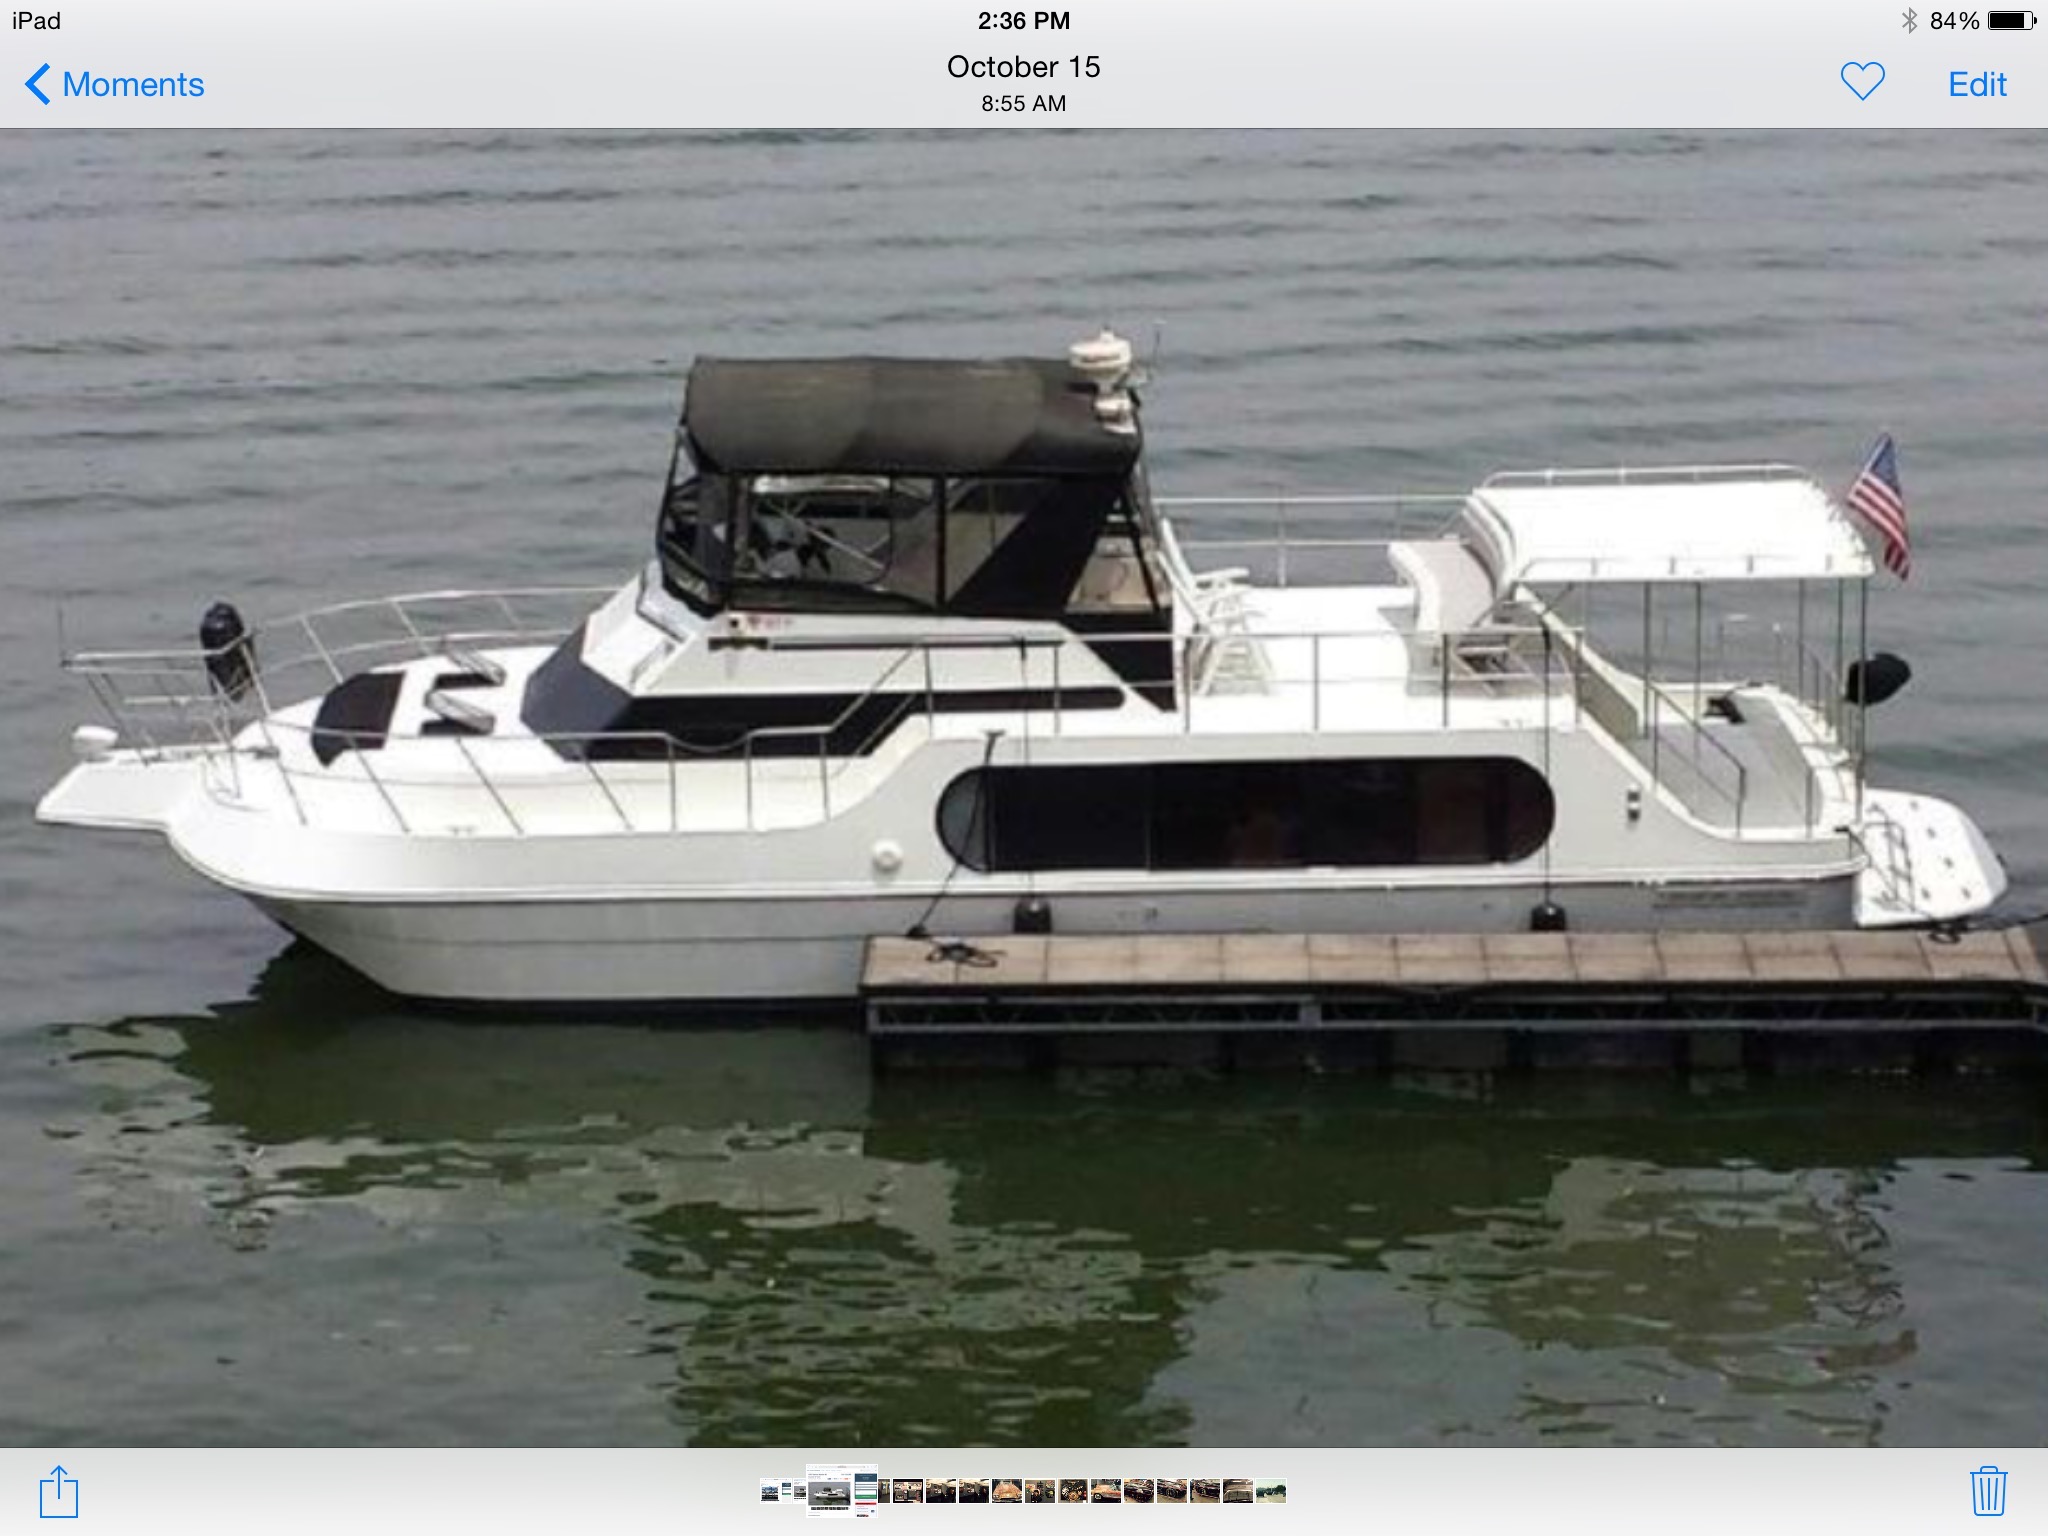 1997 45 foot Harbor Master STOLKRAFT Power boat for sale in Carolina Bch, NC - image 14 